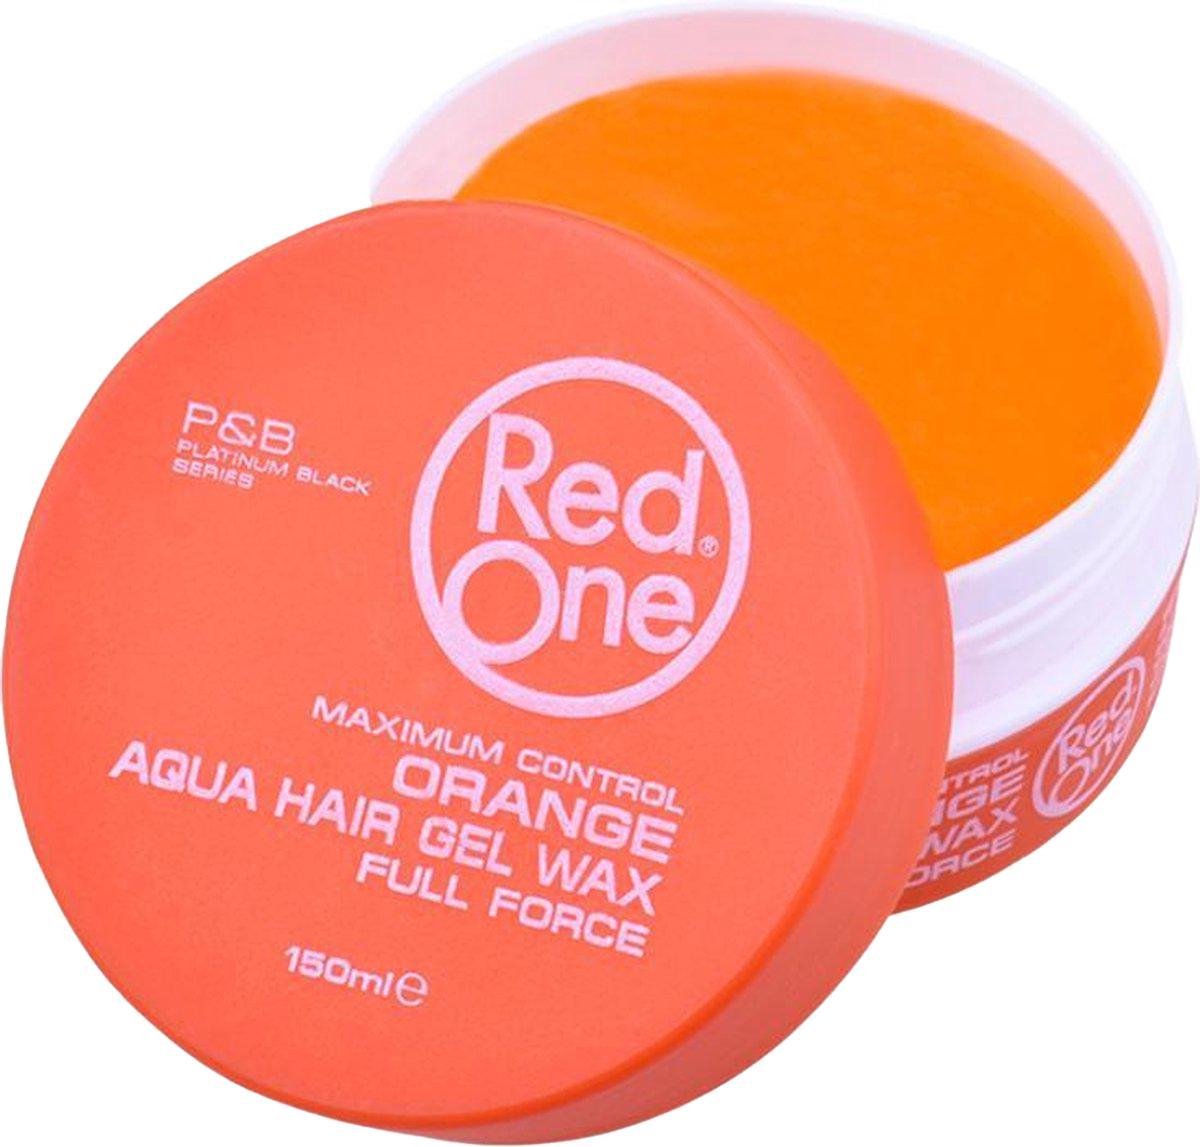 Red One Orange | Aqua haar gel wax | Red One Wax | Red One Gel | Oranje